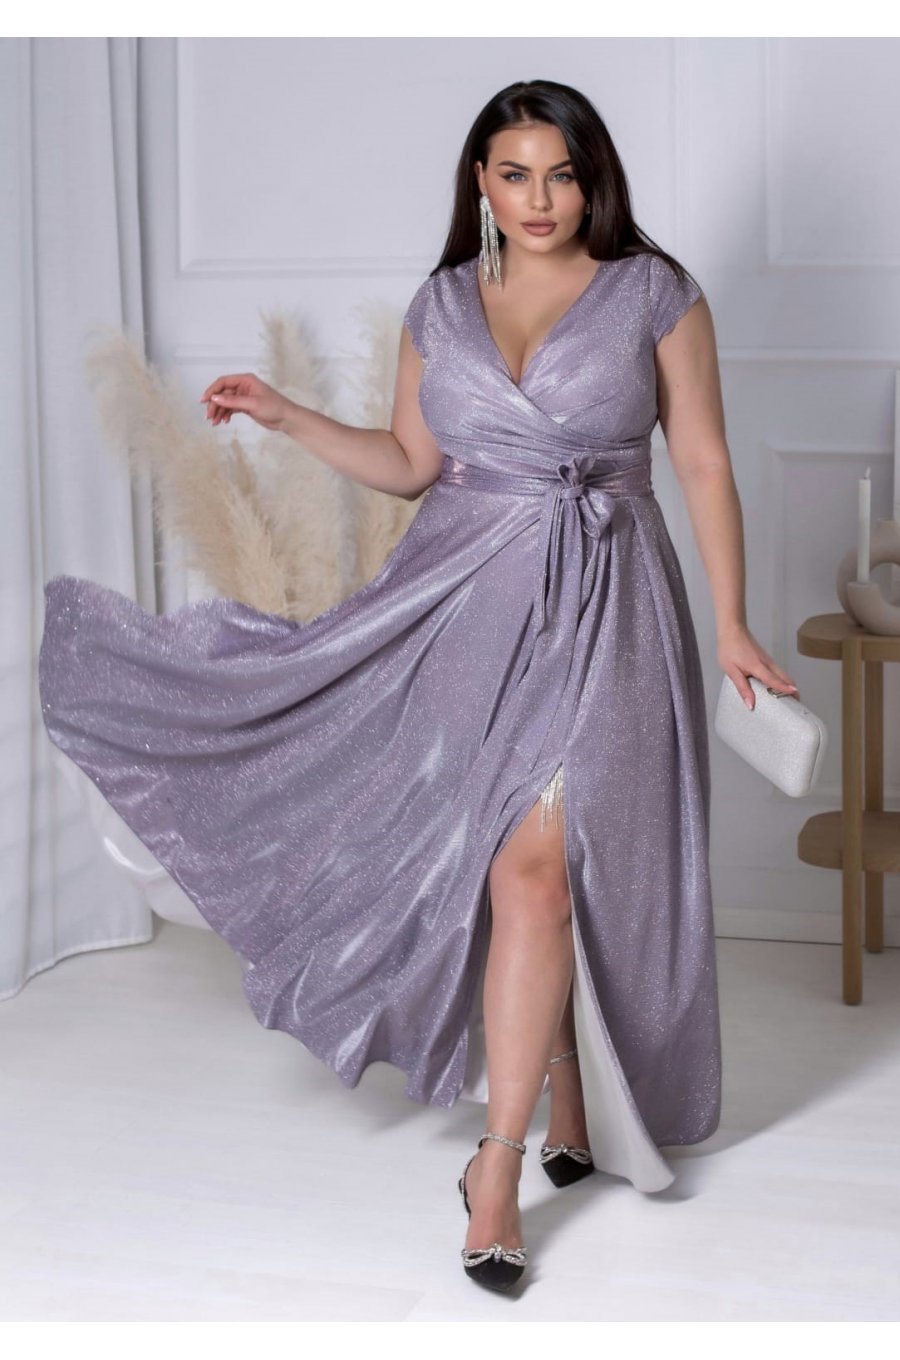 Rochie eleganta in marimi mari, lunga, din bumbac cu glitter, violet, crapata pe picior,  AmandaW 1 - jojofashion.ro